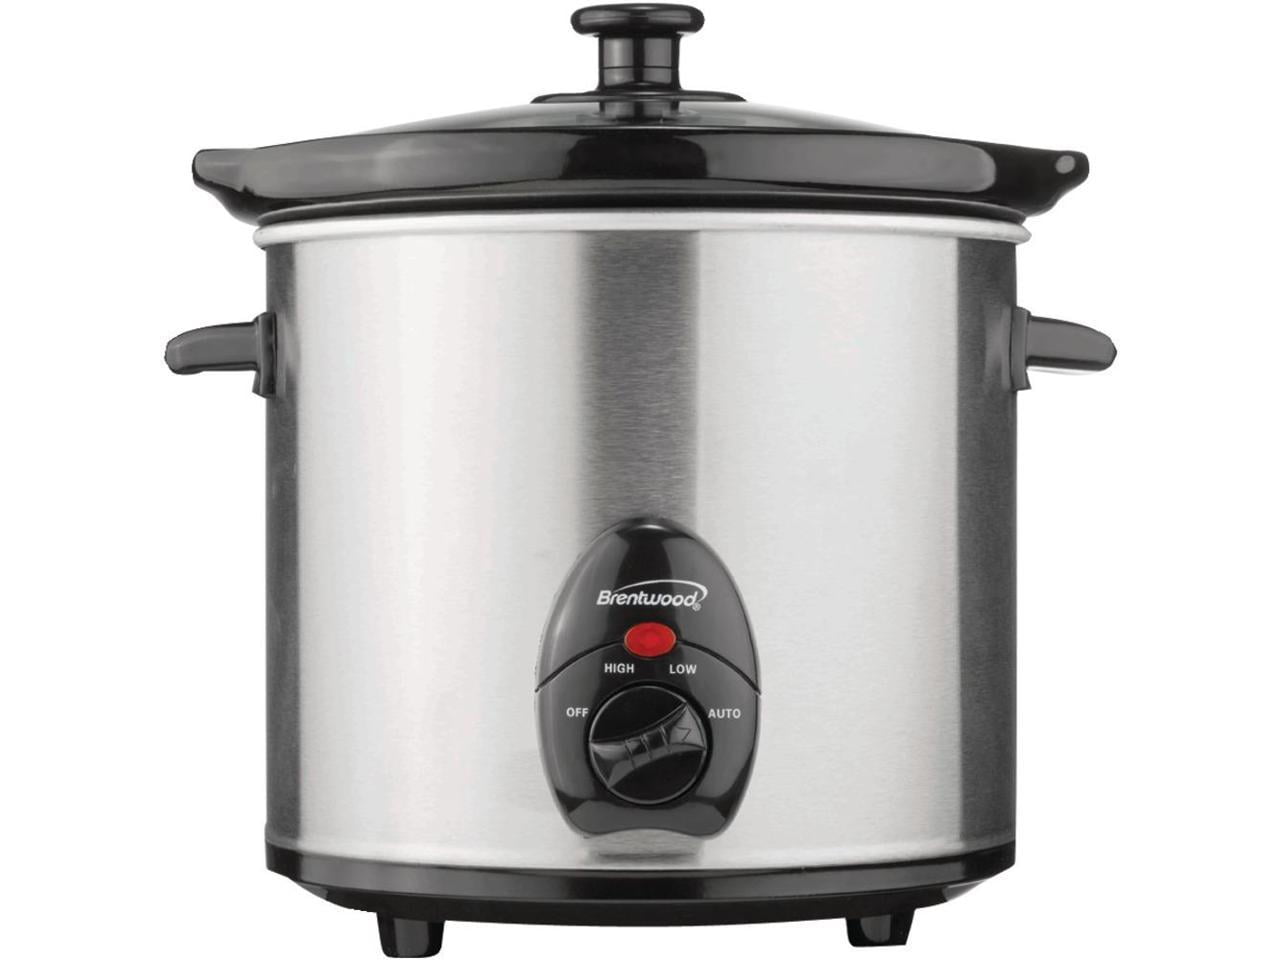  Original Inner Pot for Crock Pot 6 Quart - Stainless Steel  Replacement Pot for Crock-Pot 6 Qt Multi-Cooker Crockpot 6 Quart Pressure  Cooker 2100467 Accessories Parts: Home & Kitchen